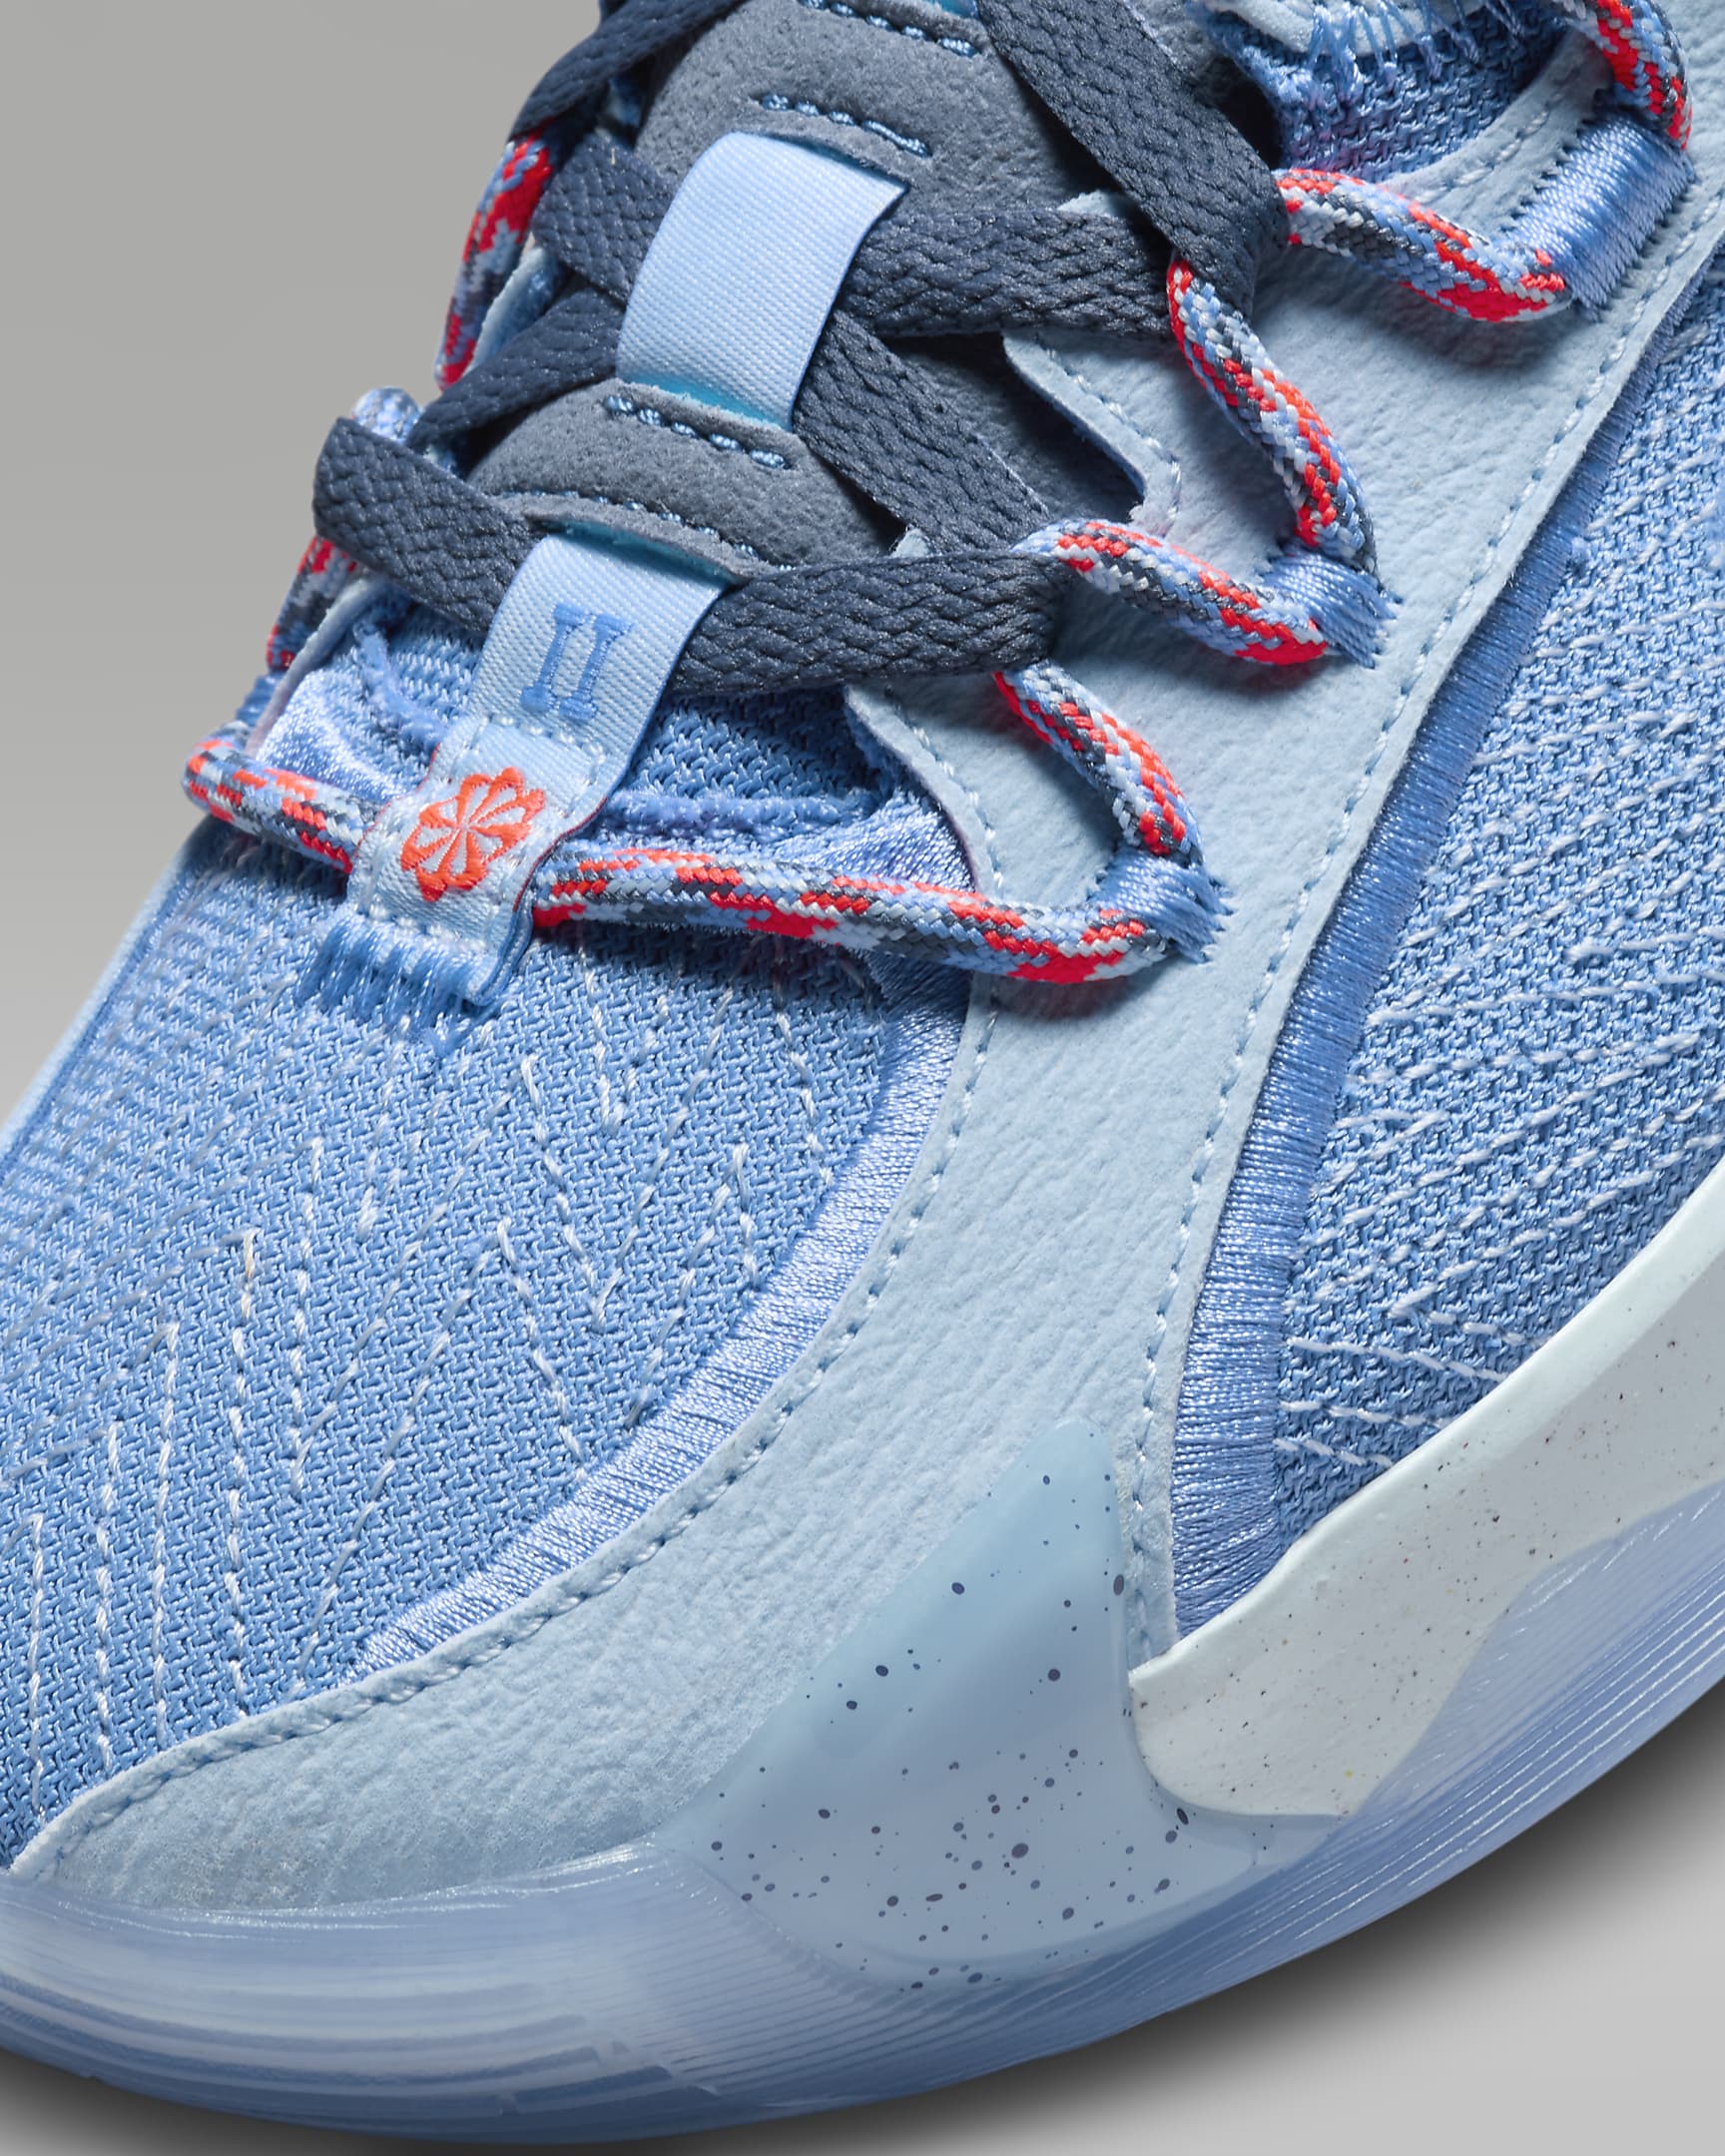 Luka 2 'Lake Bled' PF Basketball Shoes. Nike PH